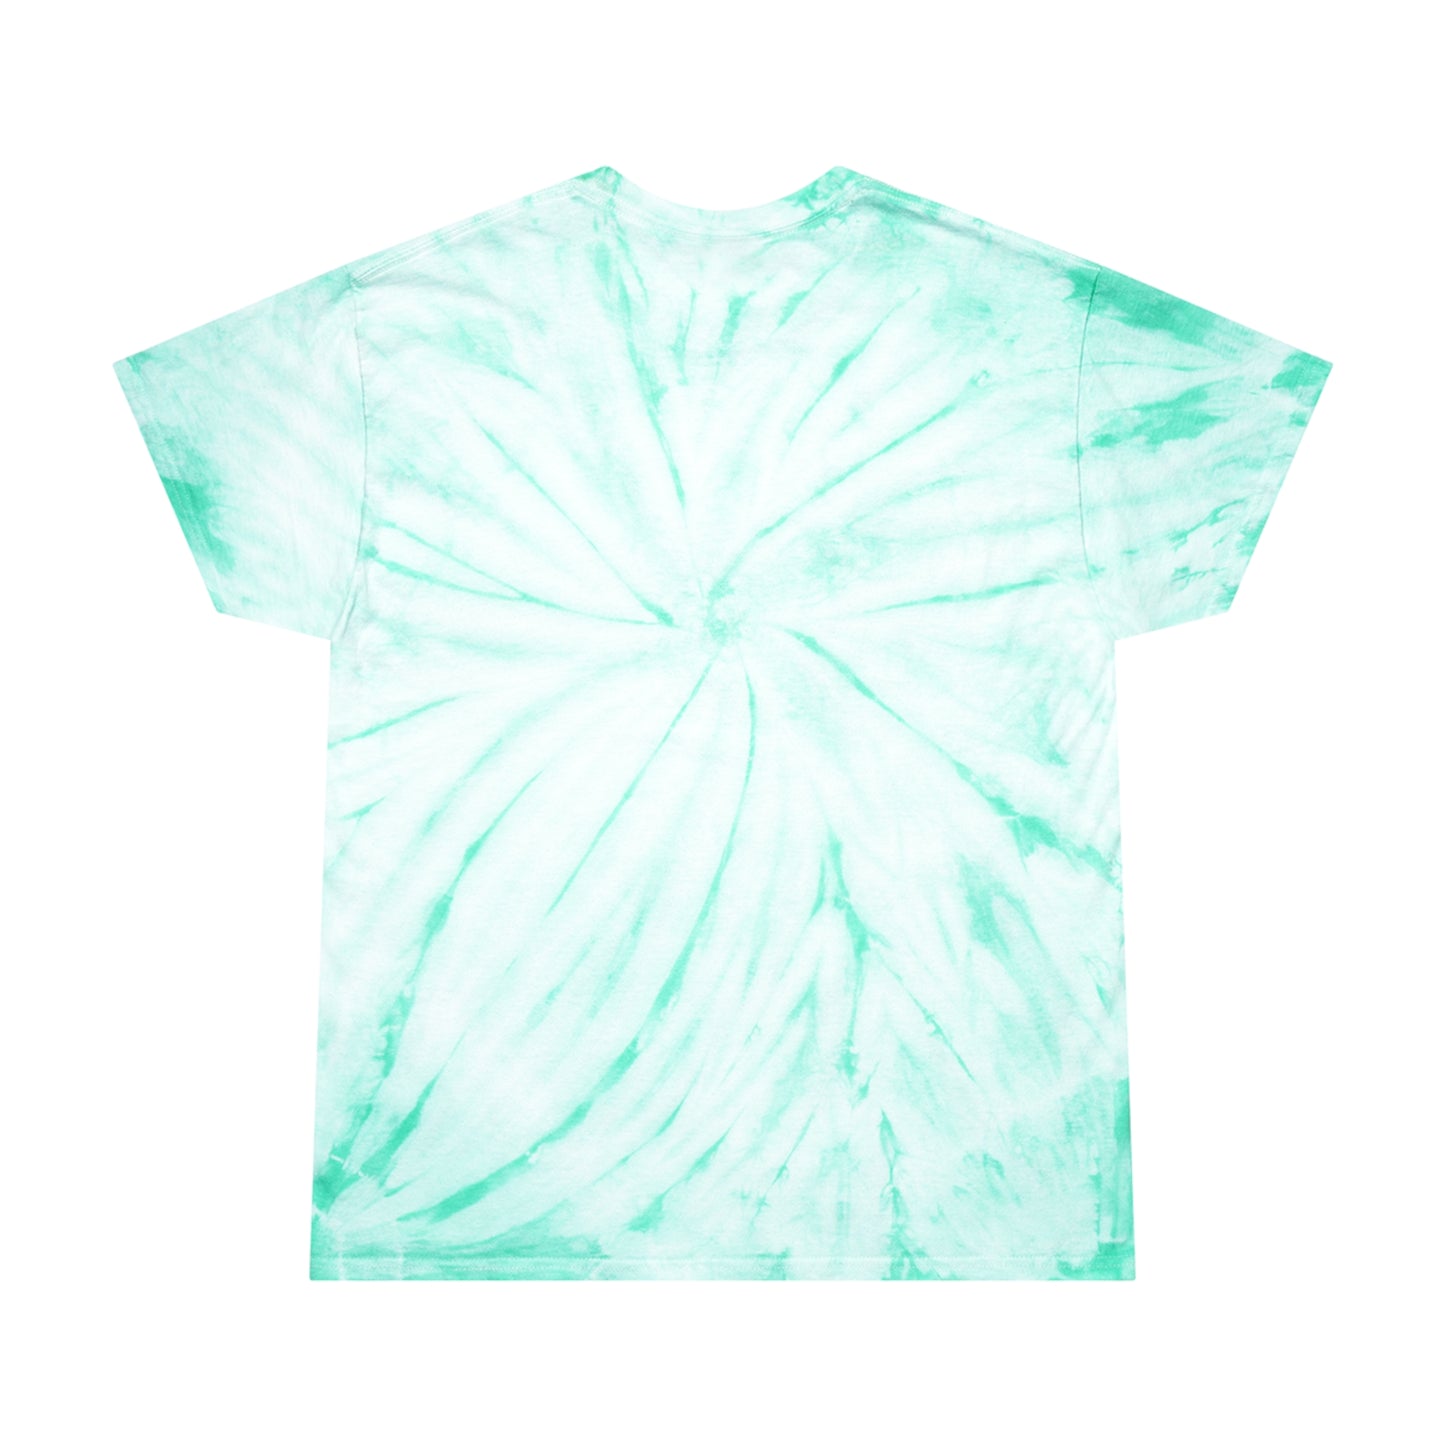 SURF Tie-Dye T-shirt